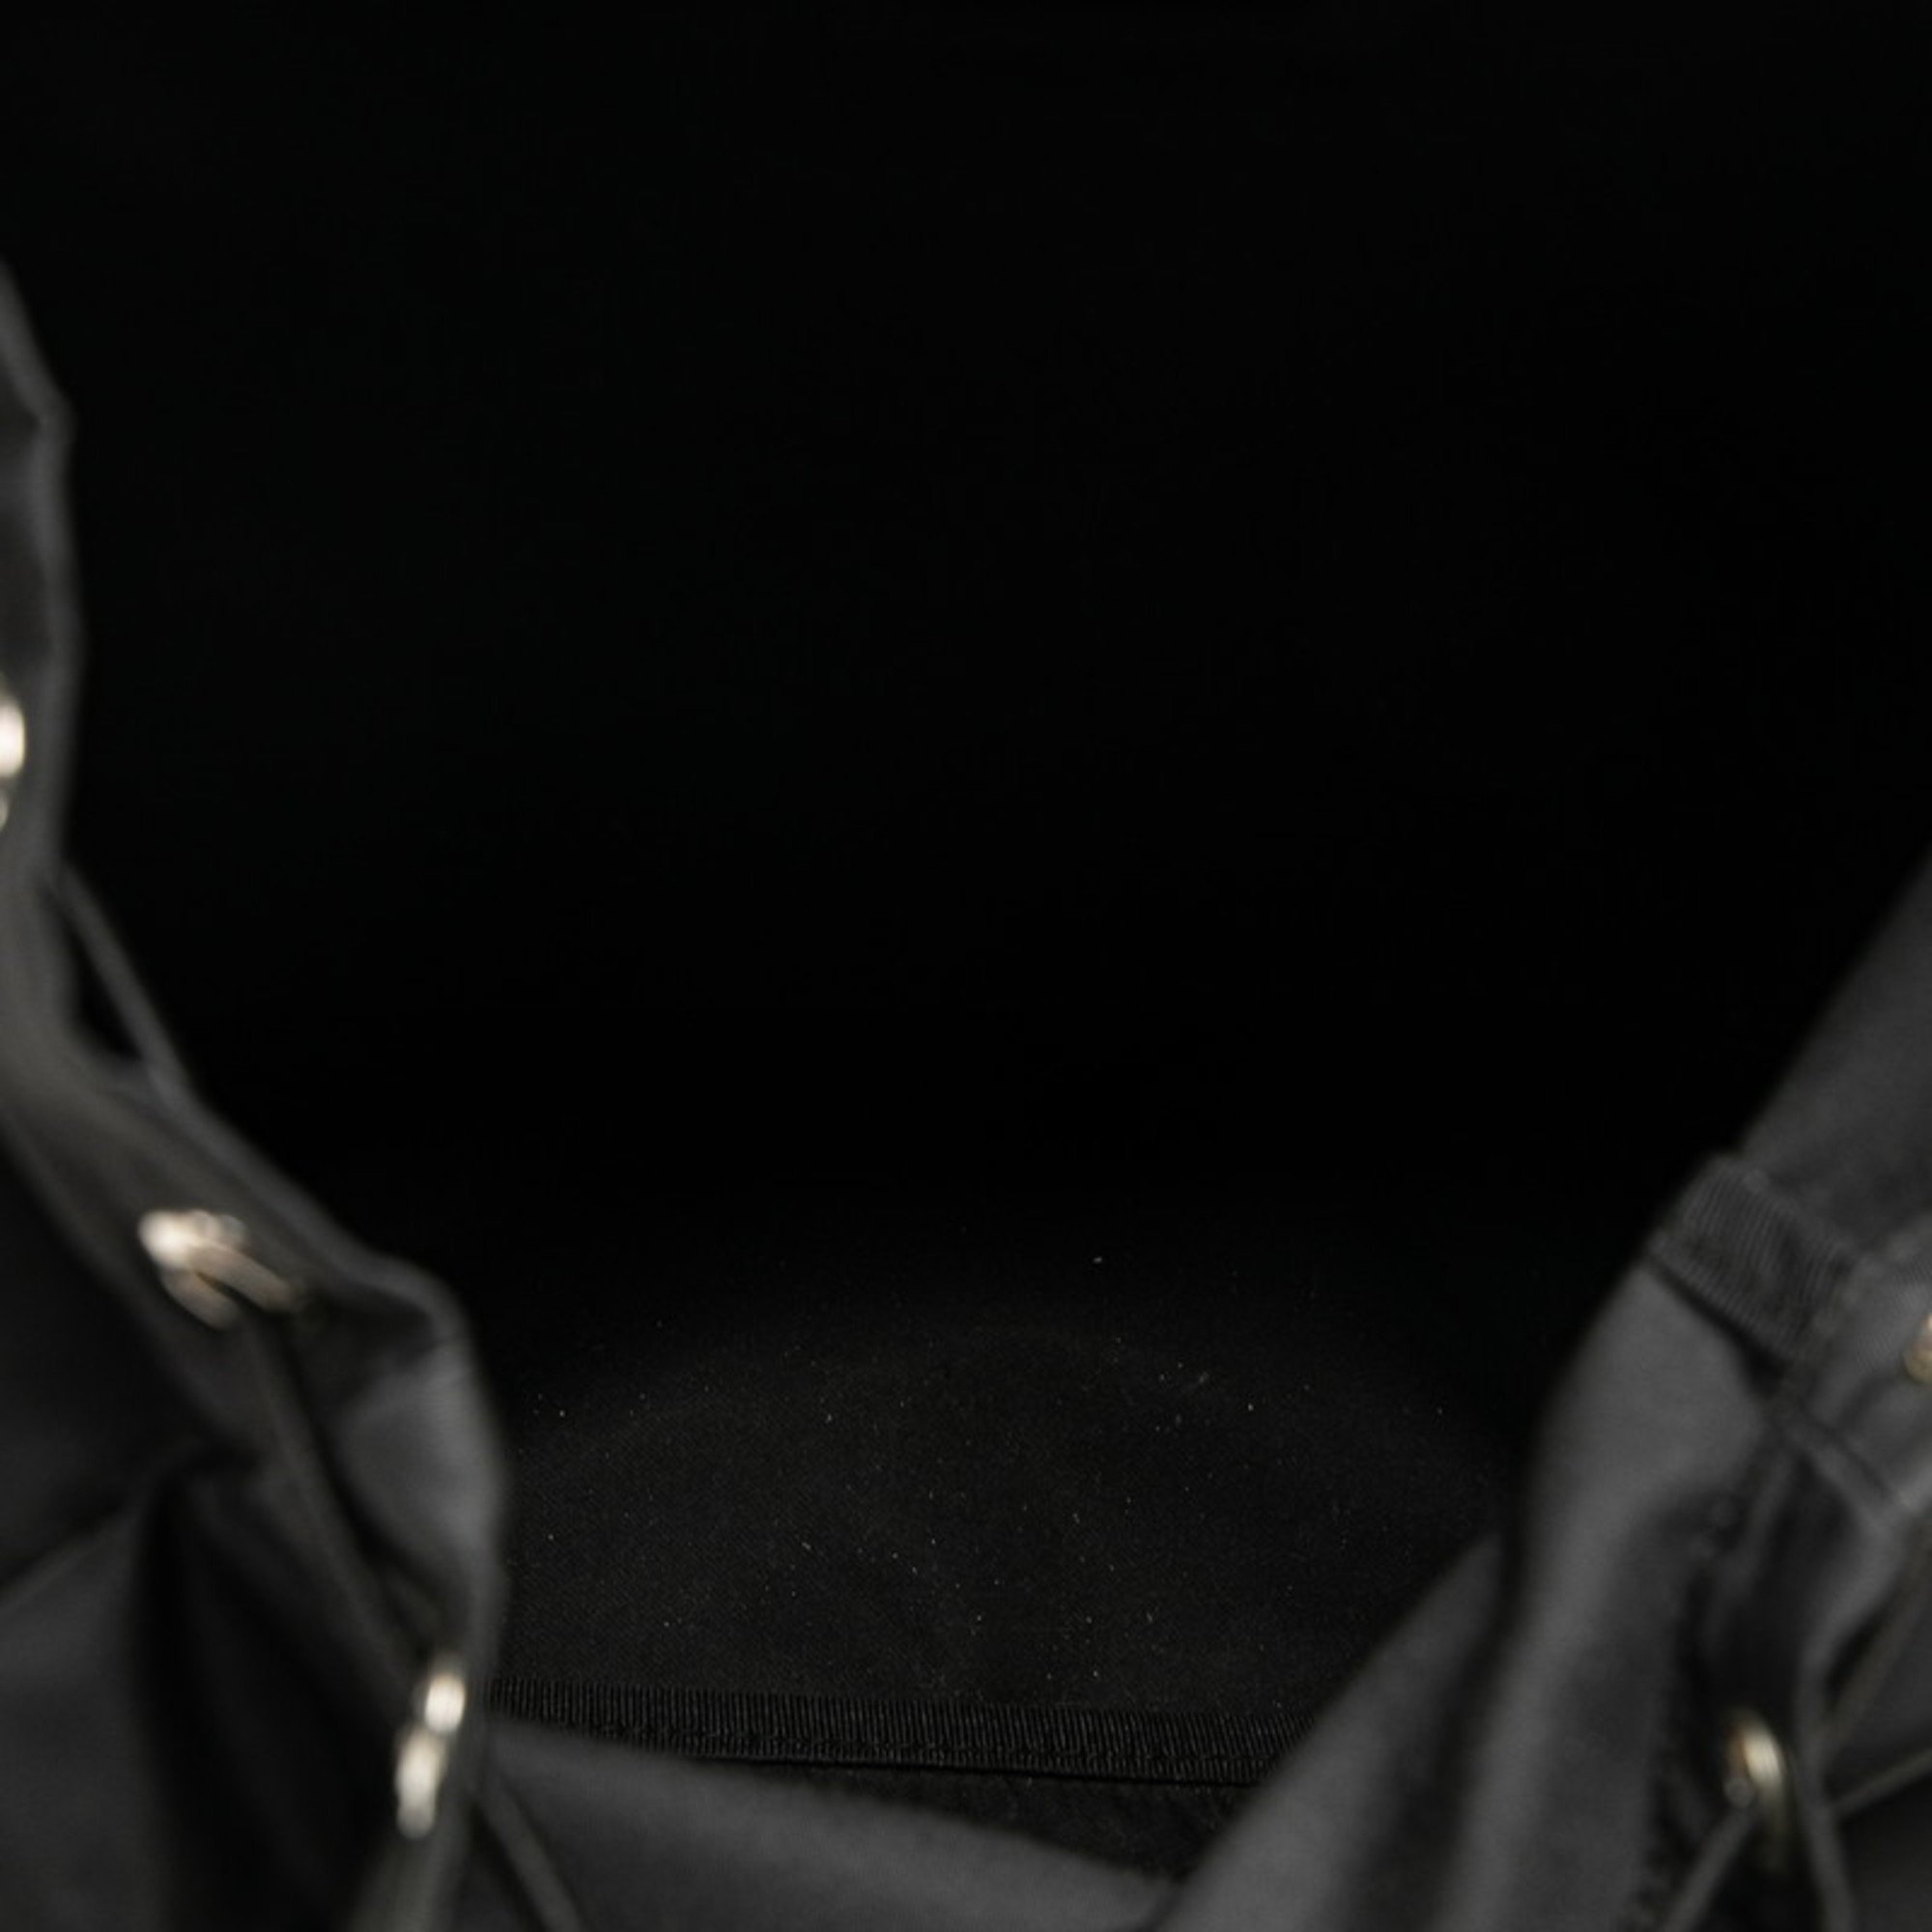 Prada Triangle Plate Backpack V135 Black Nylon Women's PRADA